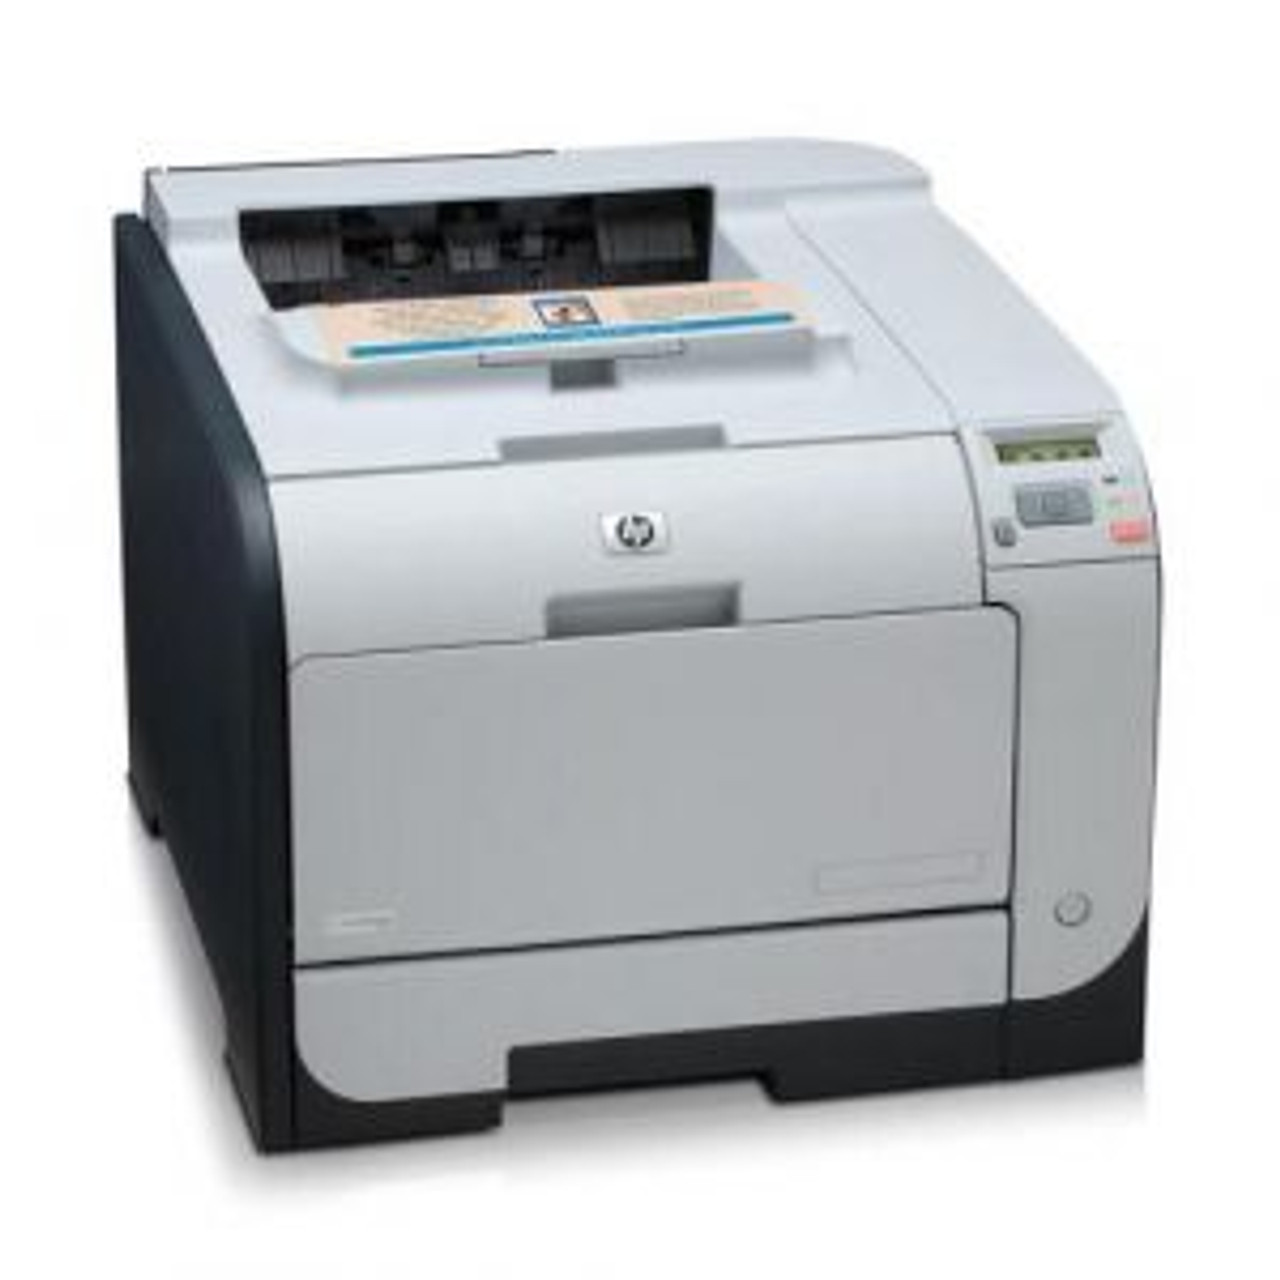 Printers & Cartridges,Printer Accessories Printer Accessories,HP,Q6455A